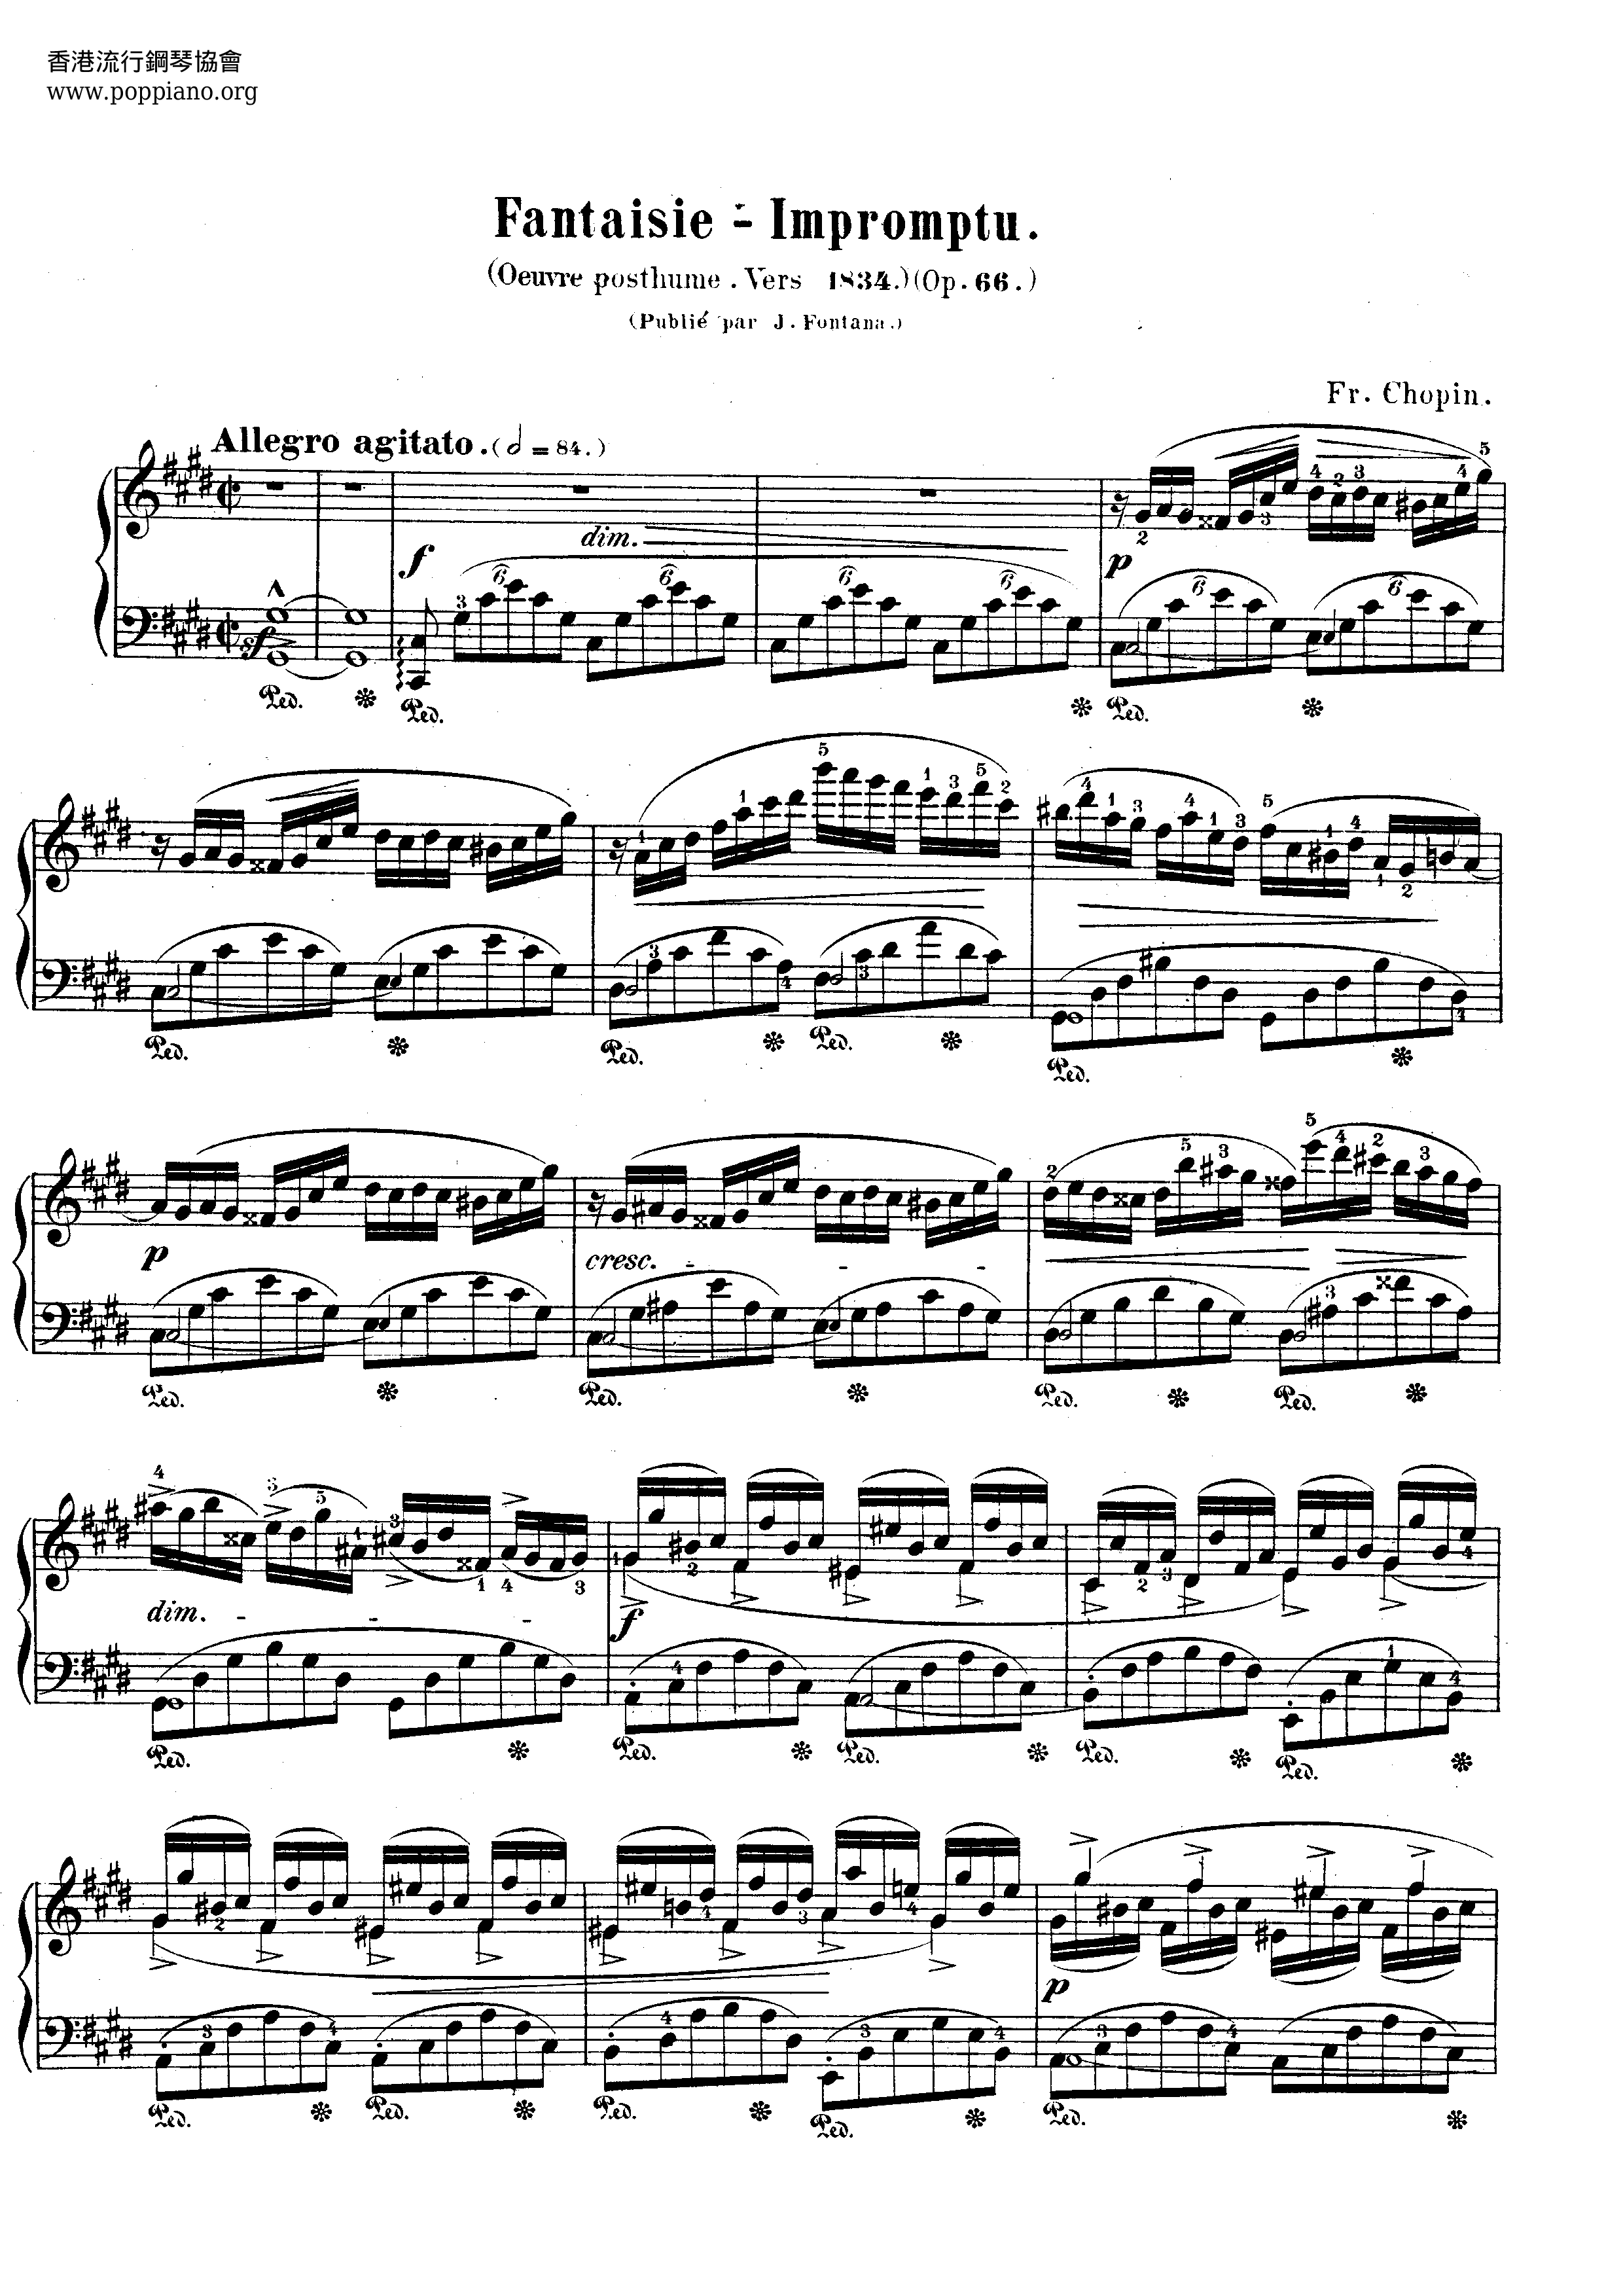 Fantaisie-Impromptu In C-Sharp Minor, Op. 66琴譜